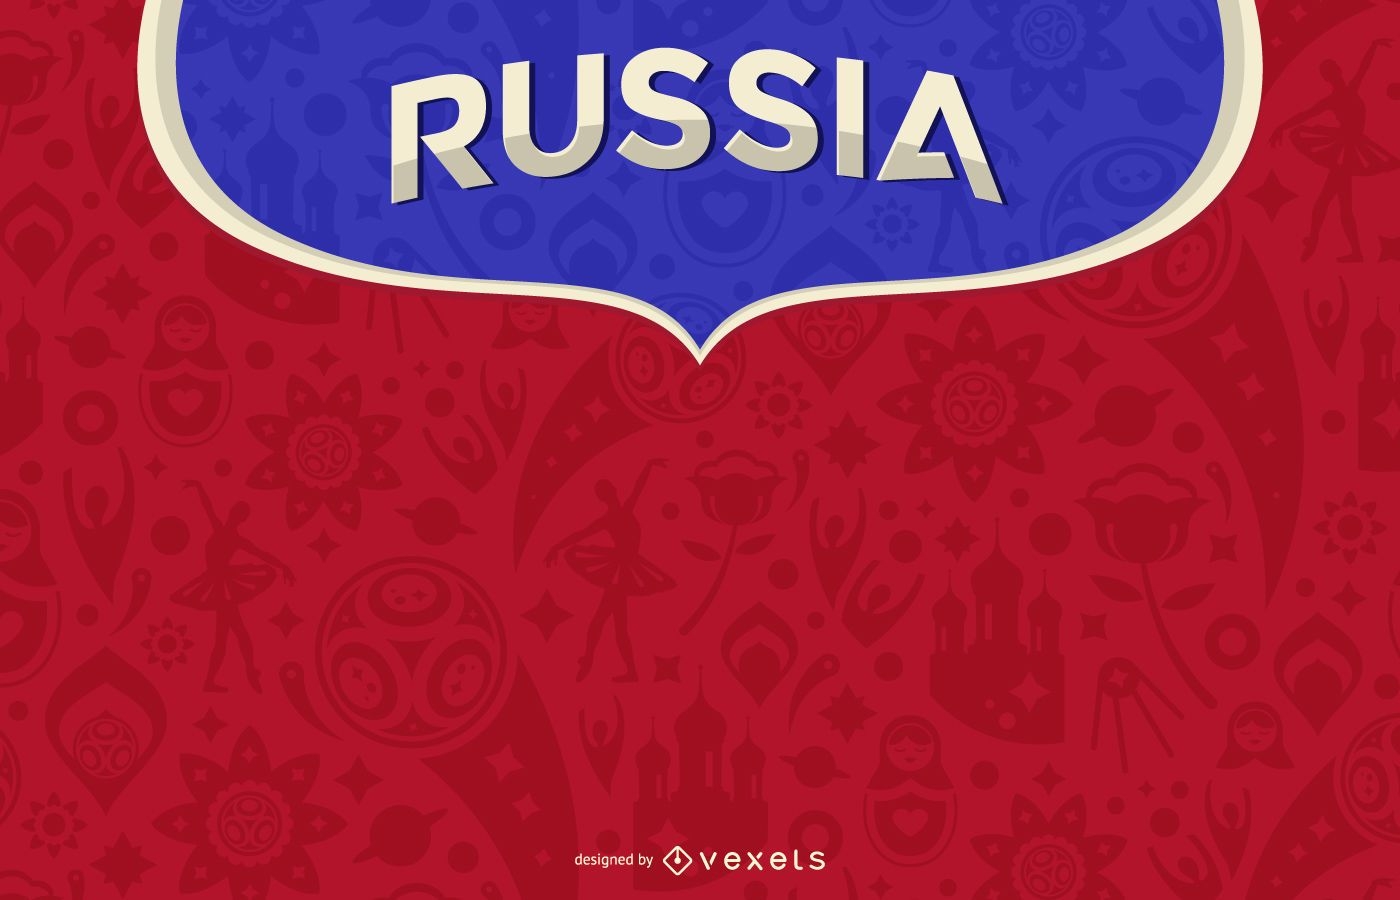 Russia 2018 background design